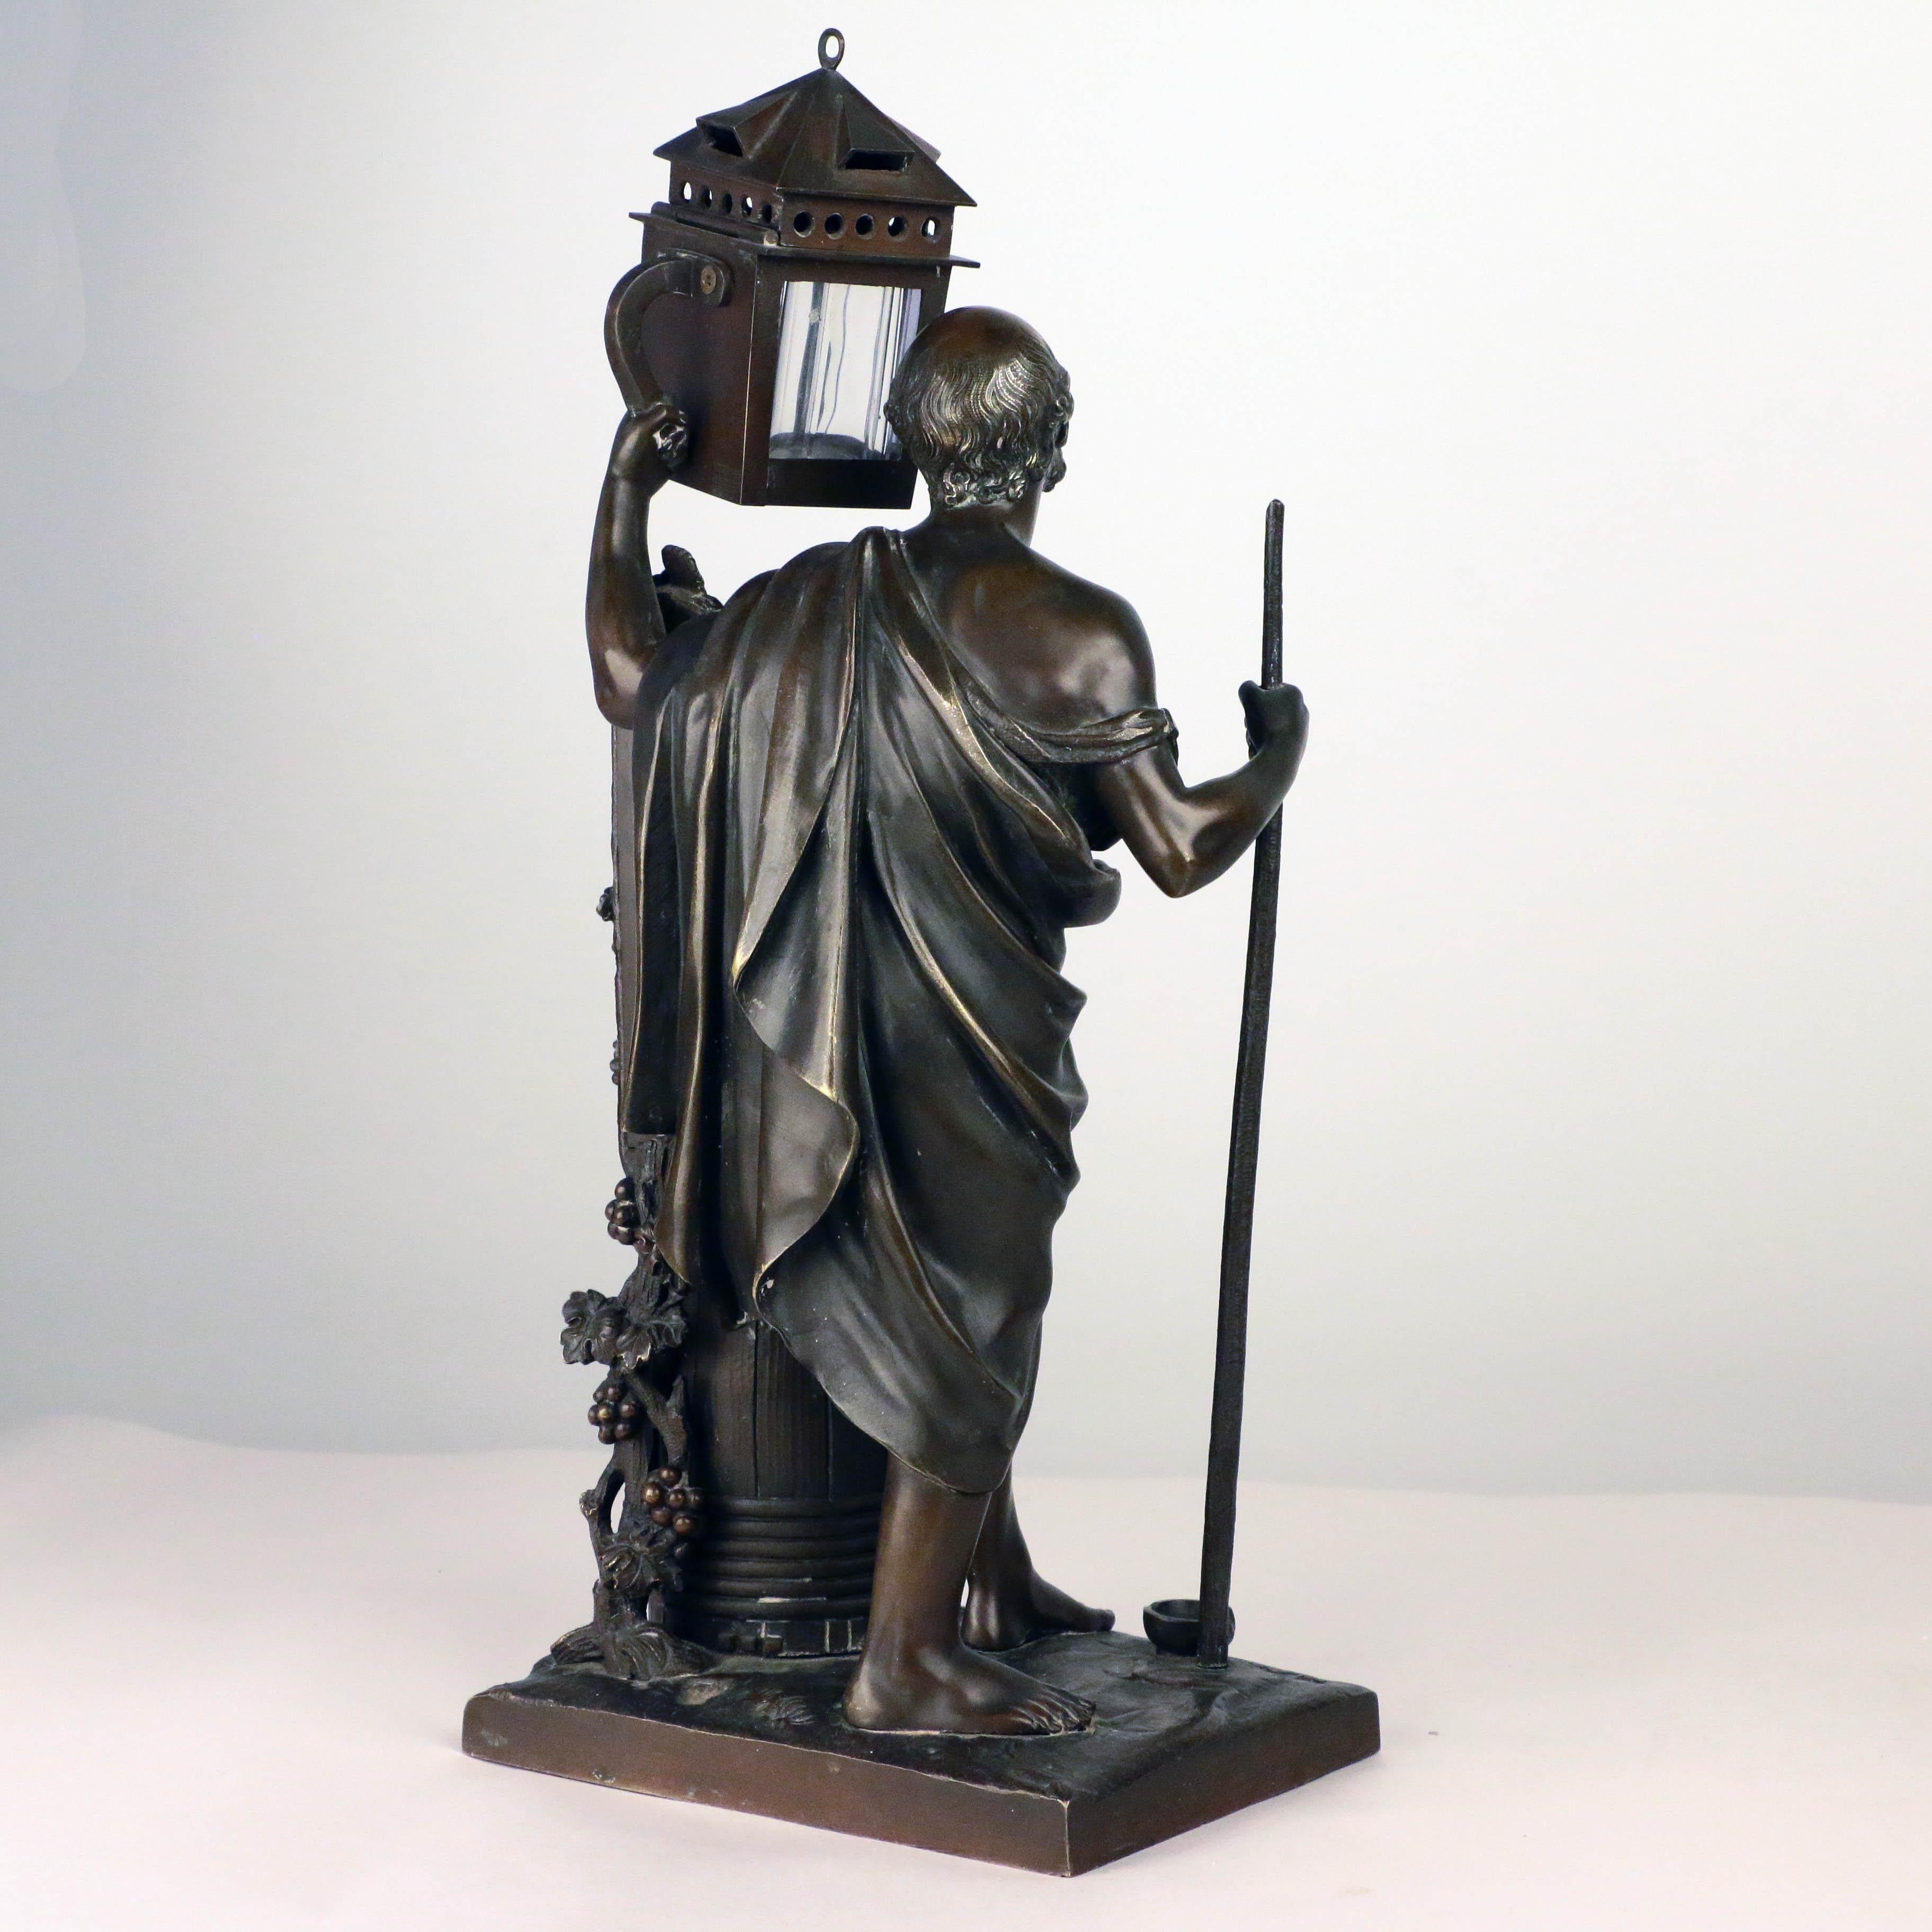 Cast Antique French Amusing Bronze Figure of Diogenes, a Desk Set